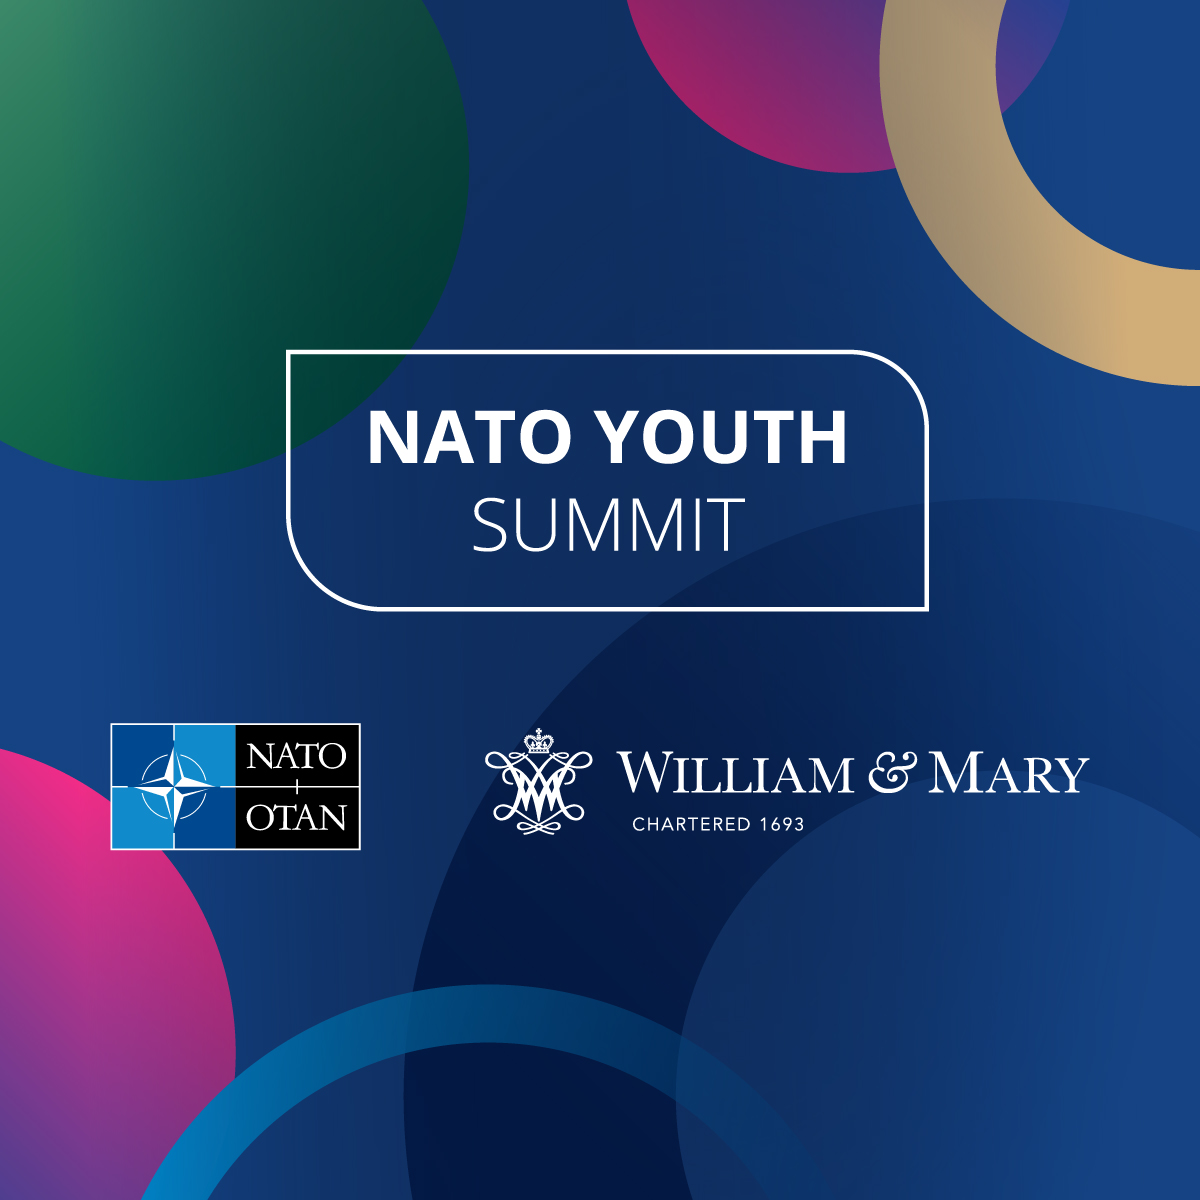 NATO Youth Summit - NATO/OTAN and William &amp; Mary